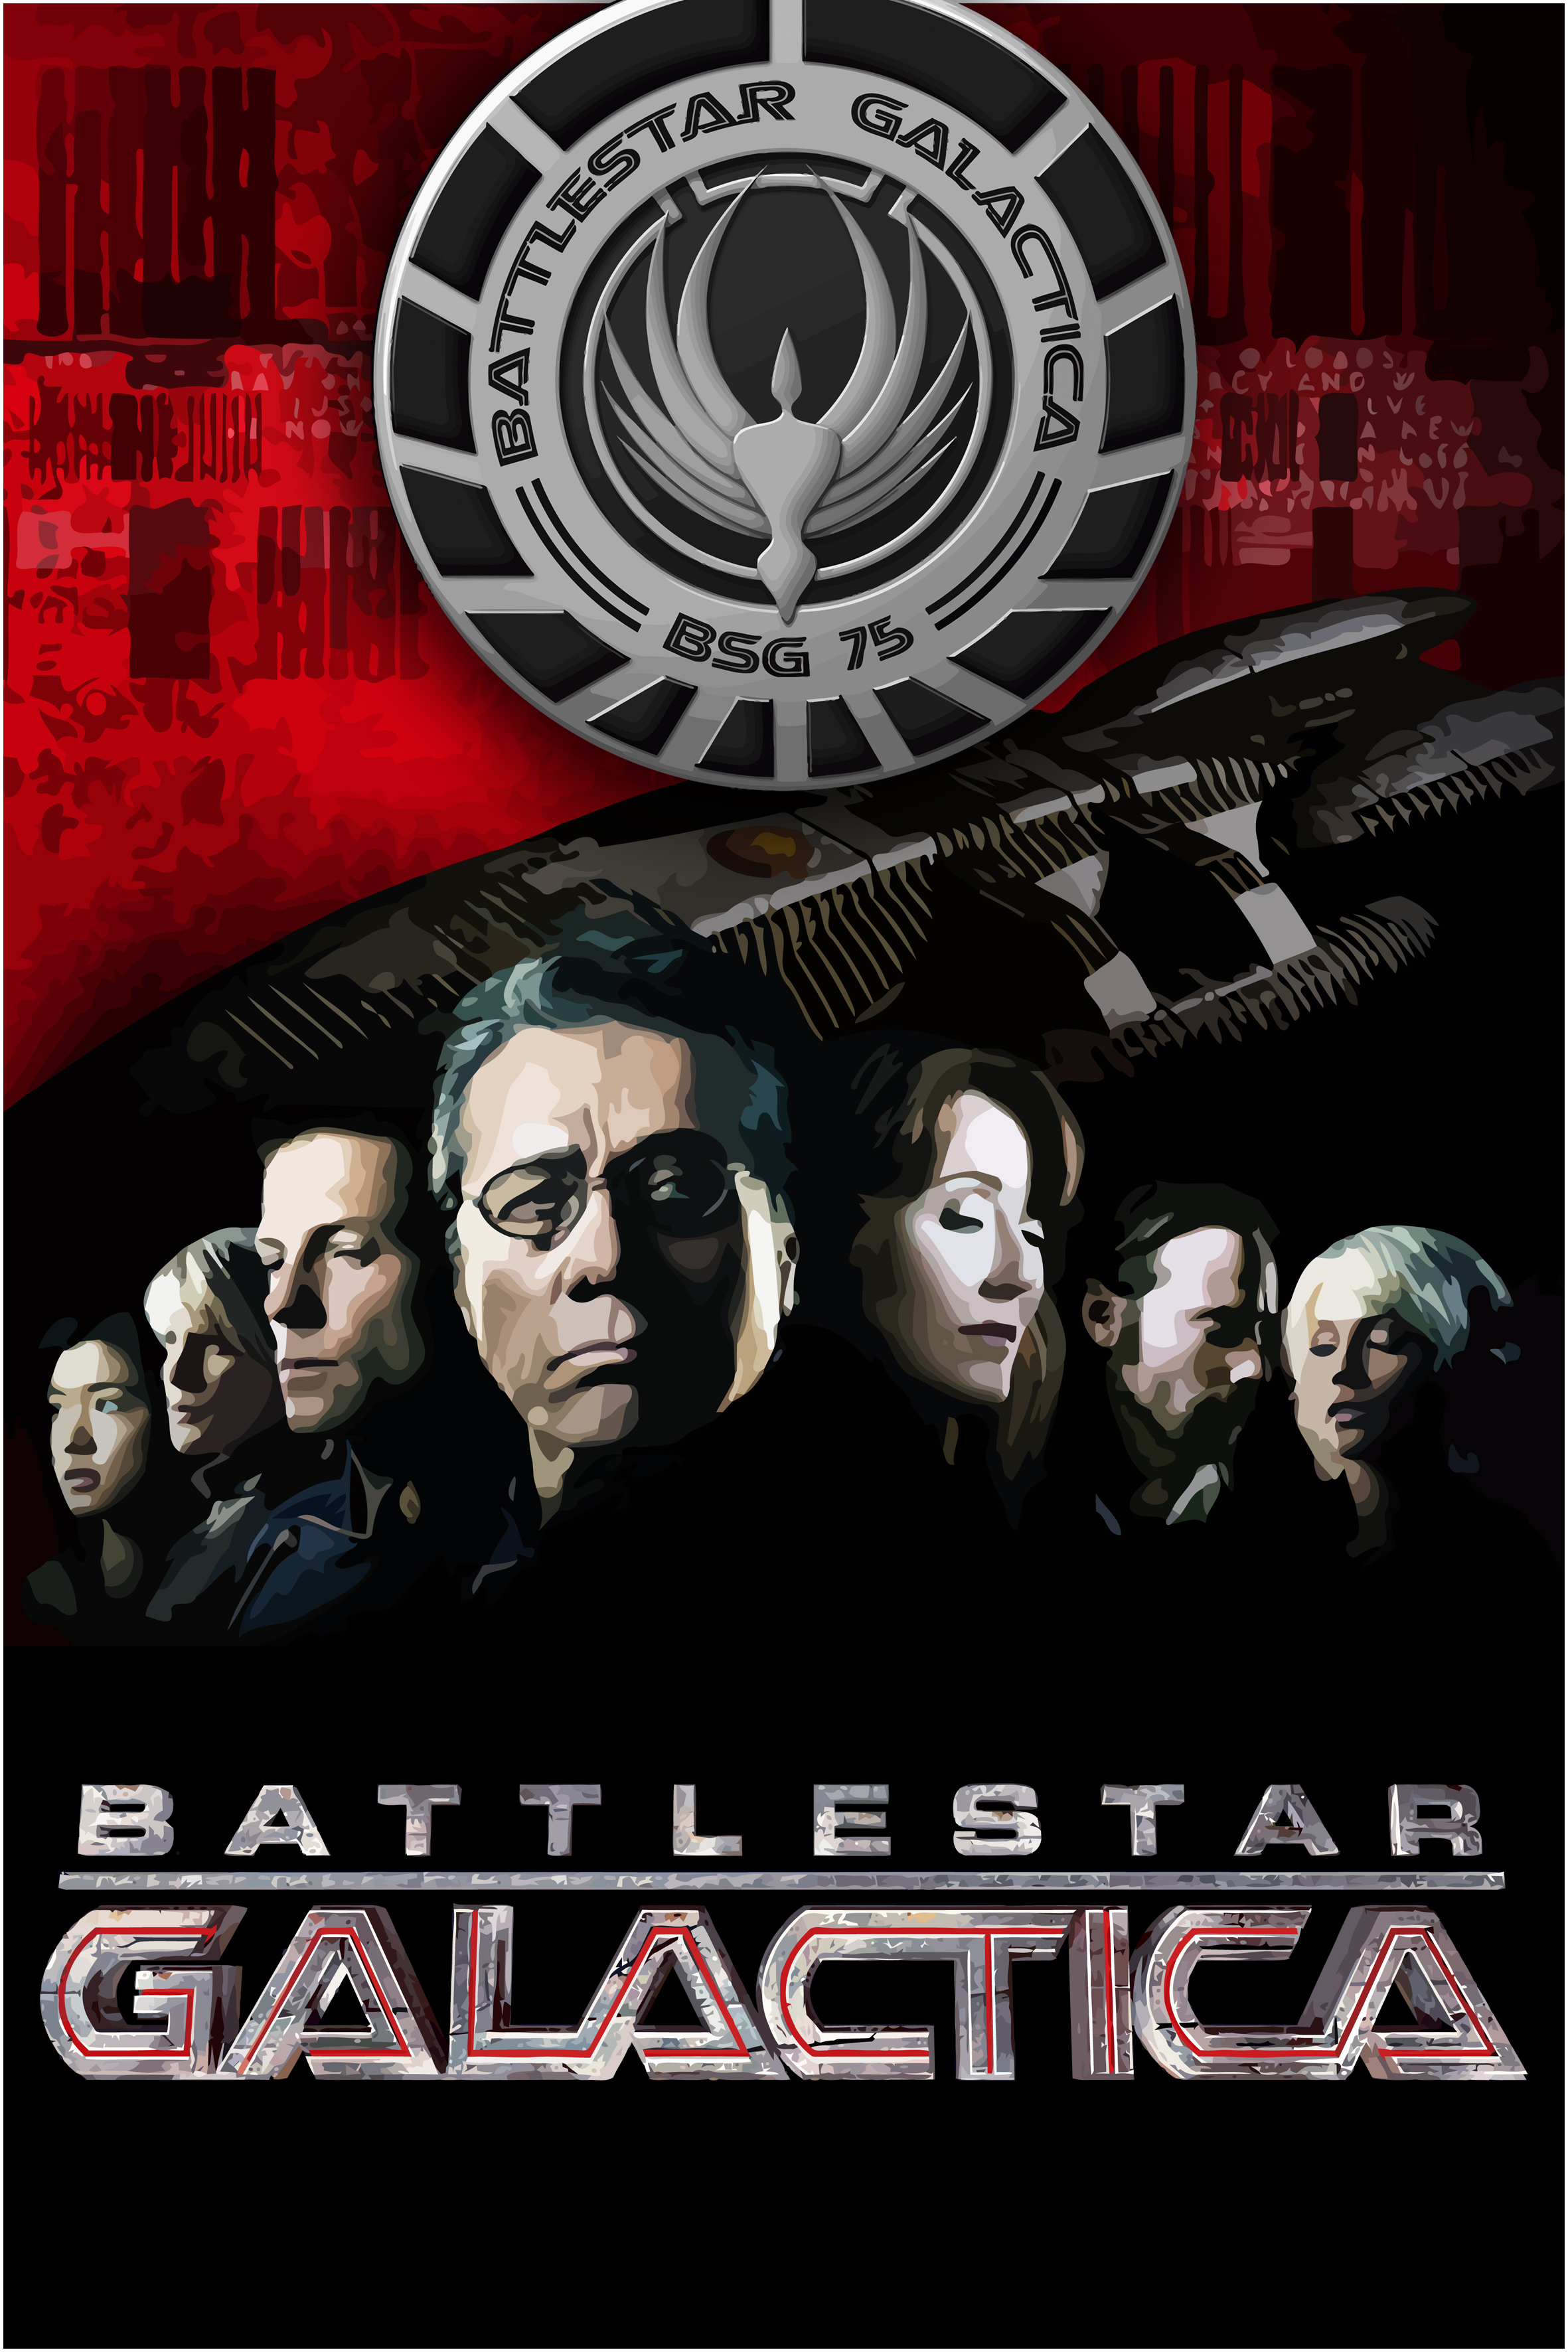 HQ Battlestar Galactica (2003) Wallpapers | File 2497.89Kb